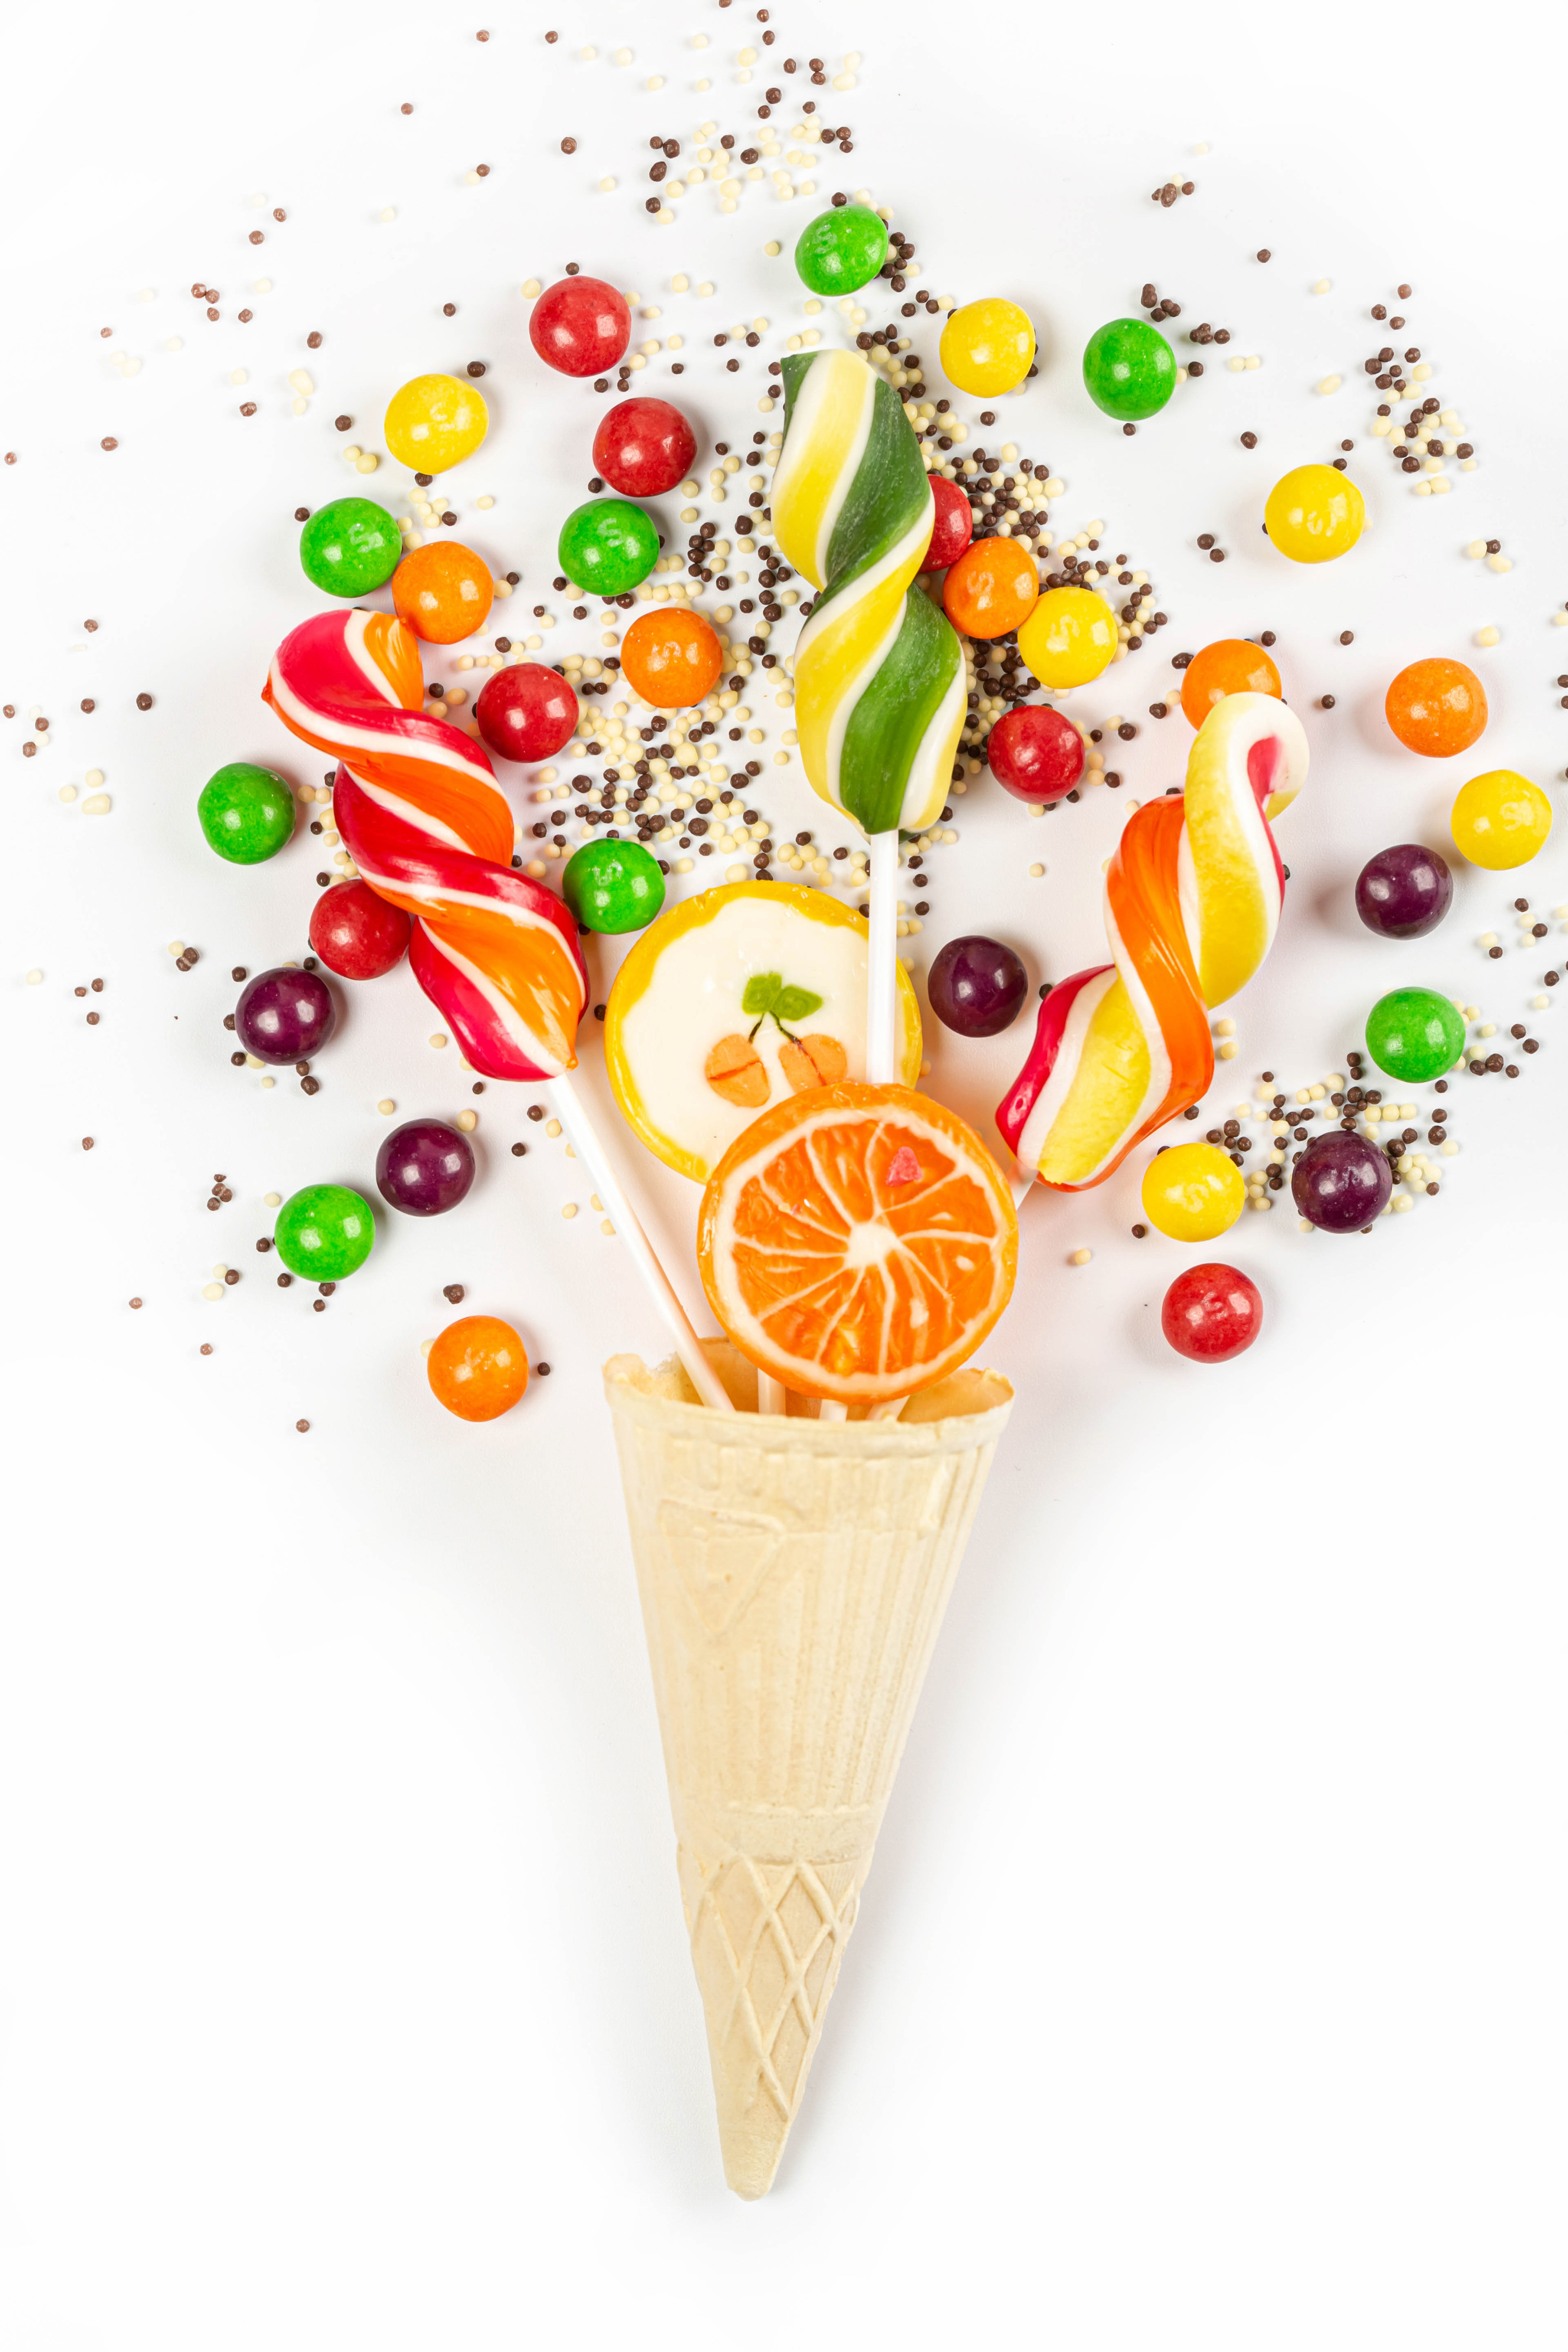 Wallpapers food dragee lollipop on the desktop